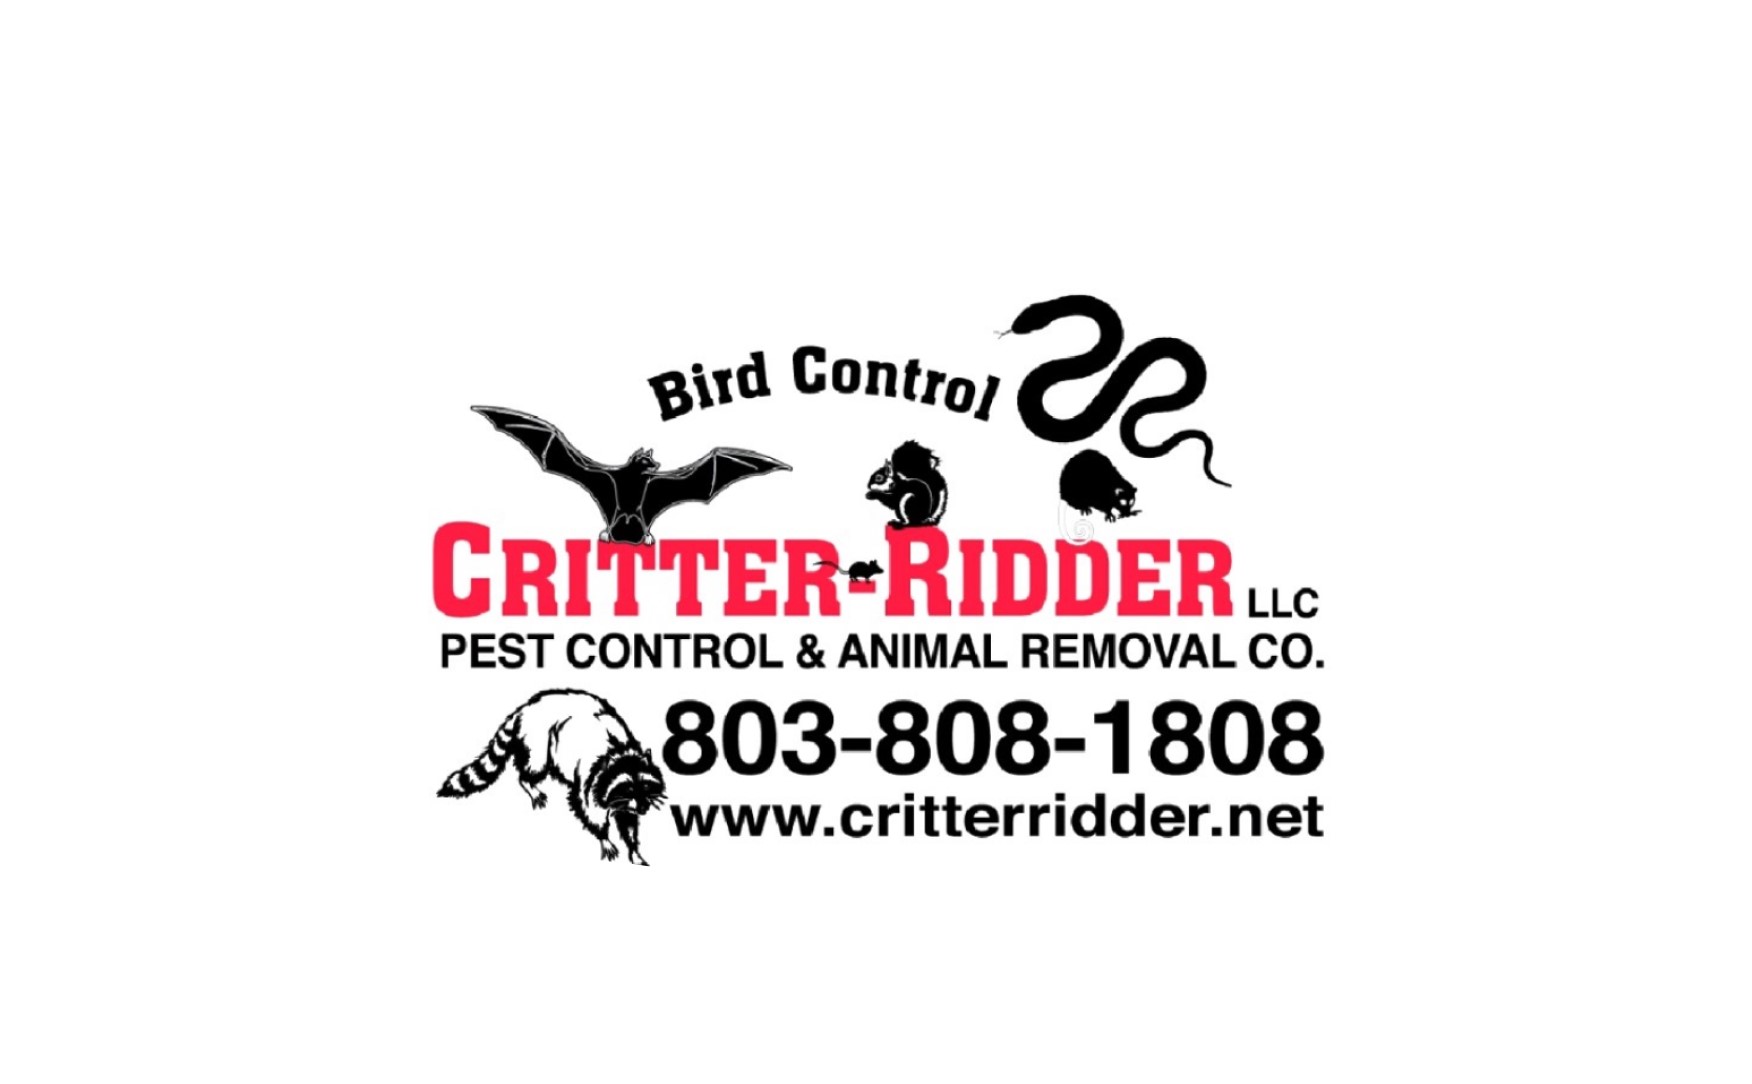 Critter-Ridder Pest Control & Animal Removal Co., LLC Logo